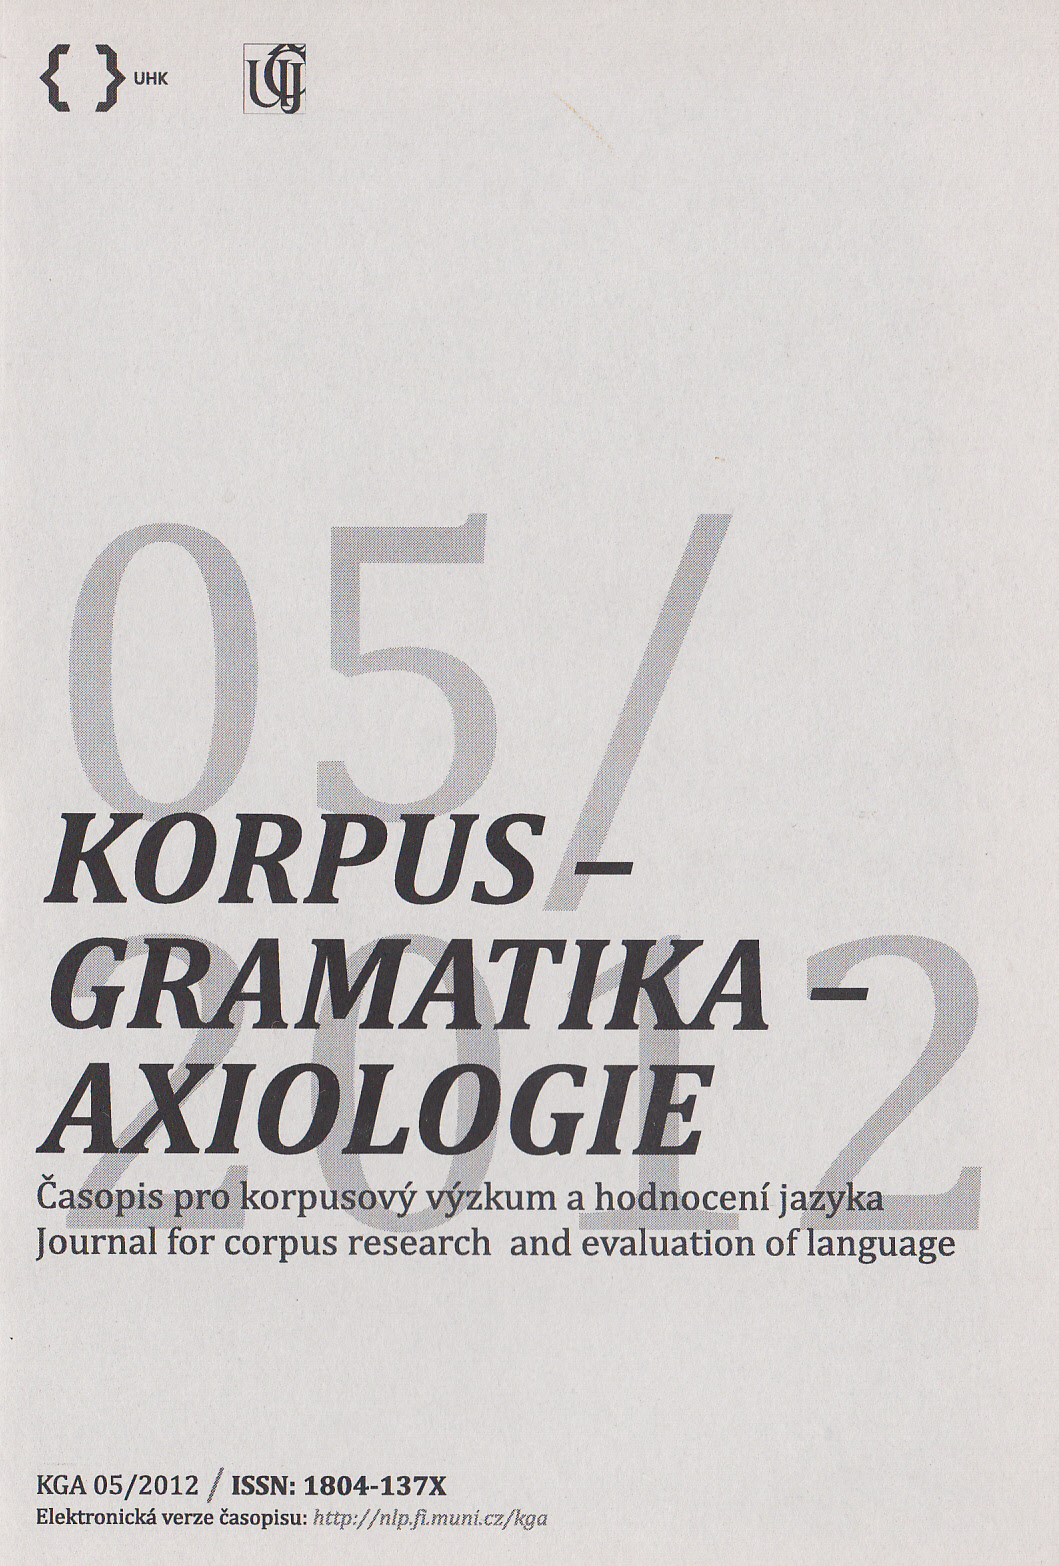 František Čermák, Vladimír Petkevič, Alexandr Rosen (eds.): Korpusová lingvistika Praha 2011, 1–3. Cover Image